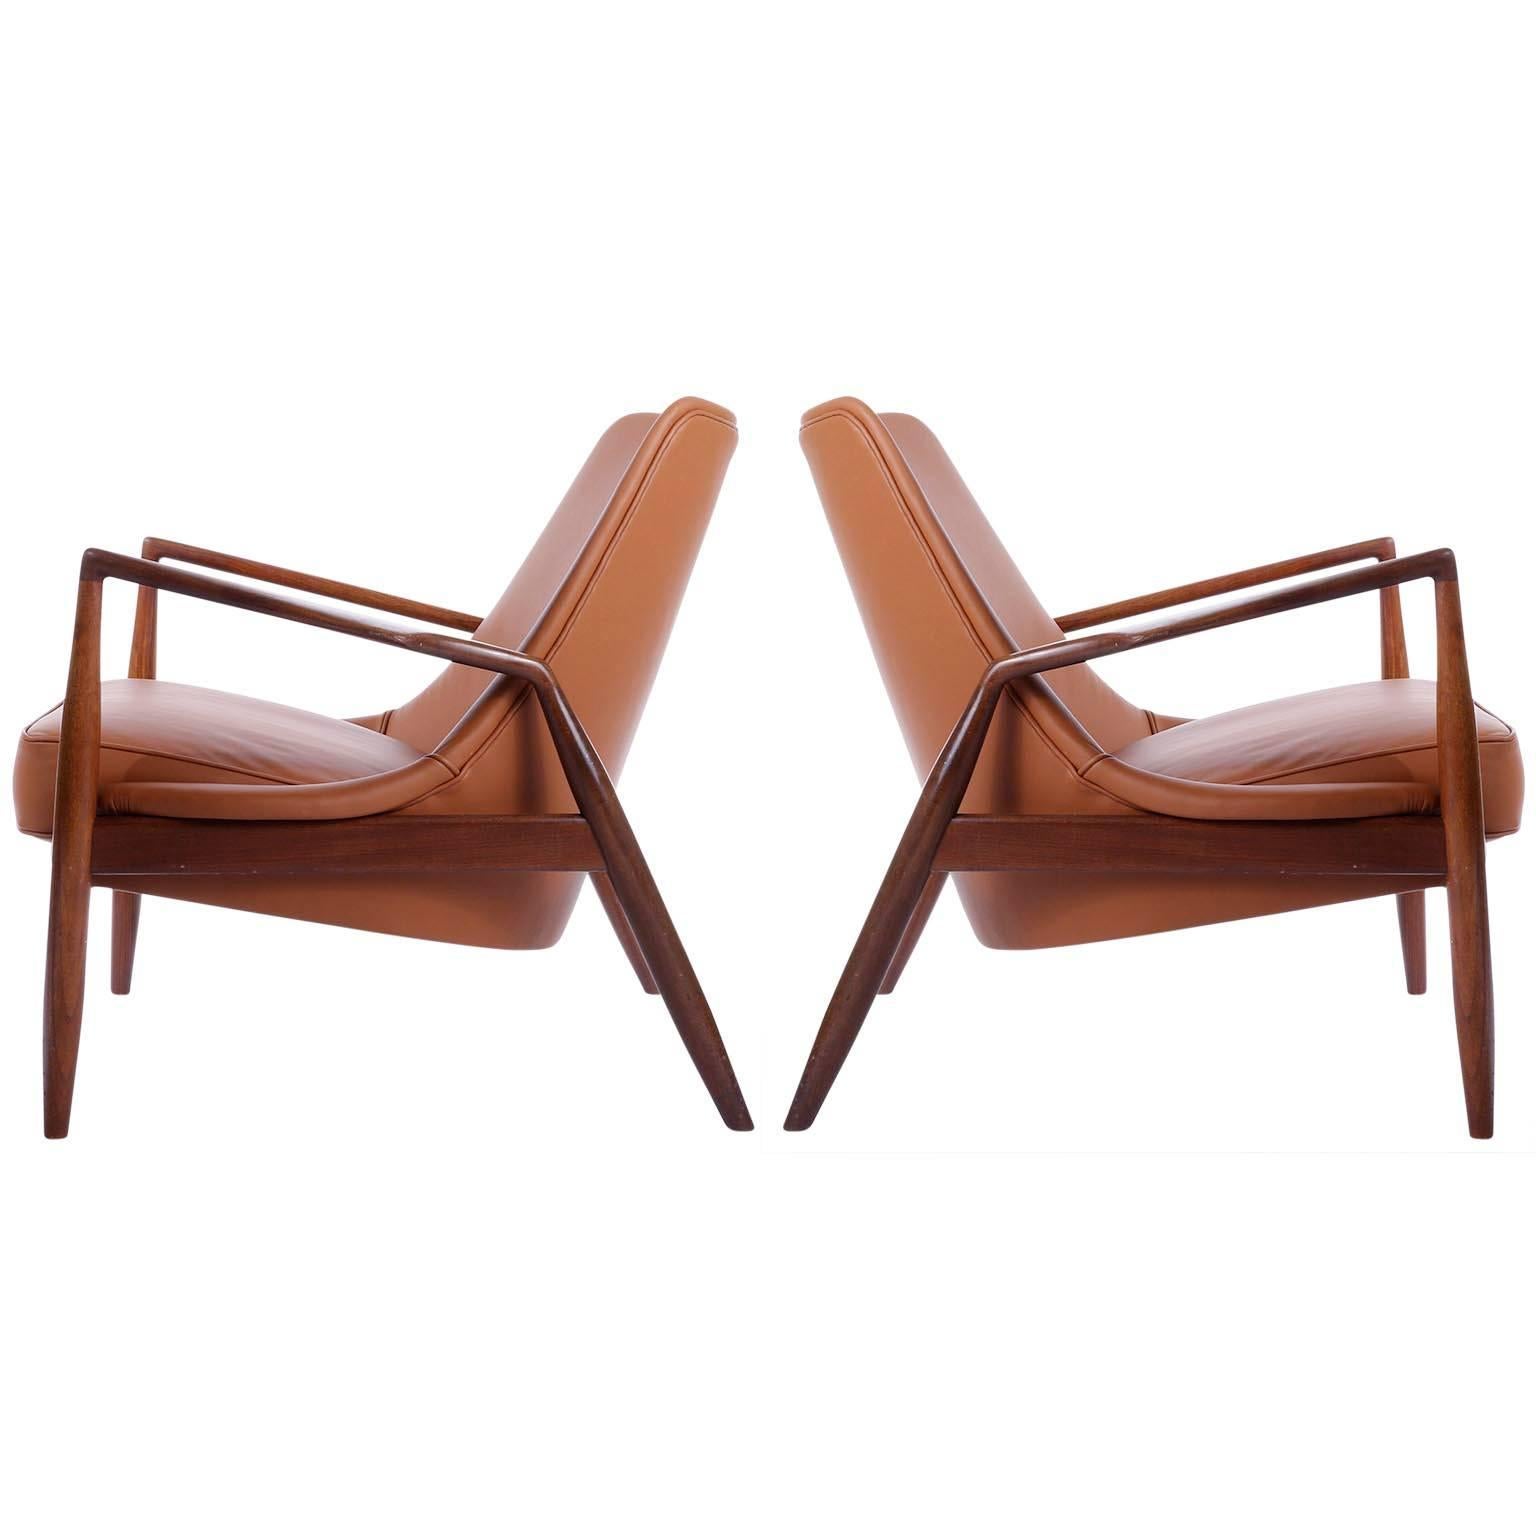 Scandinavian Modern Ib Kofod-Larsen Pair of Seal Lounge Chairs in Teak Cognac Leather, Sweden, 1956